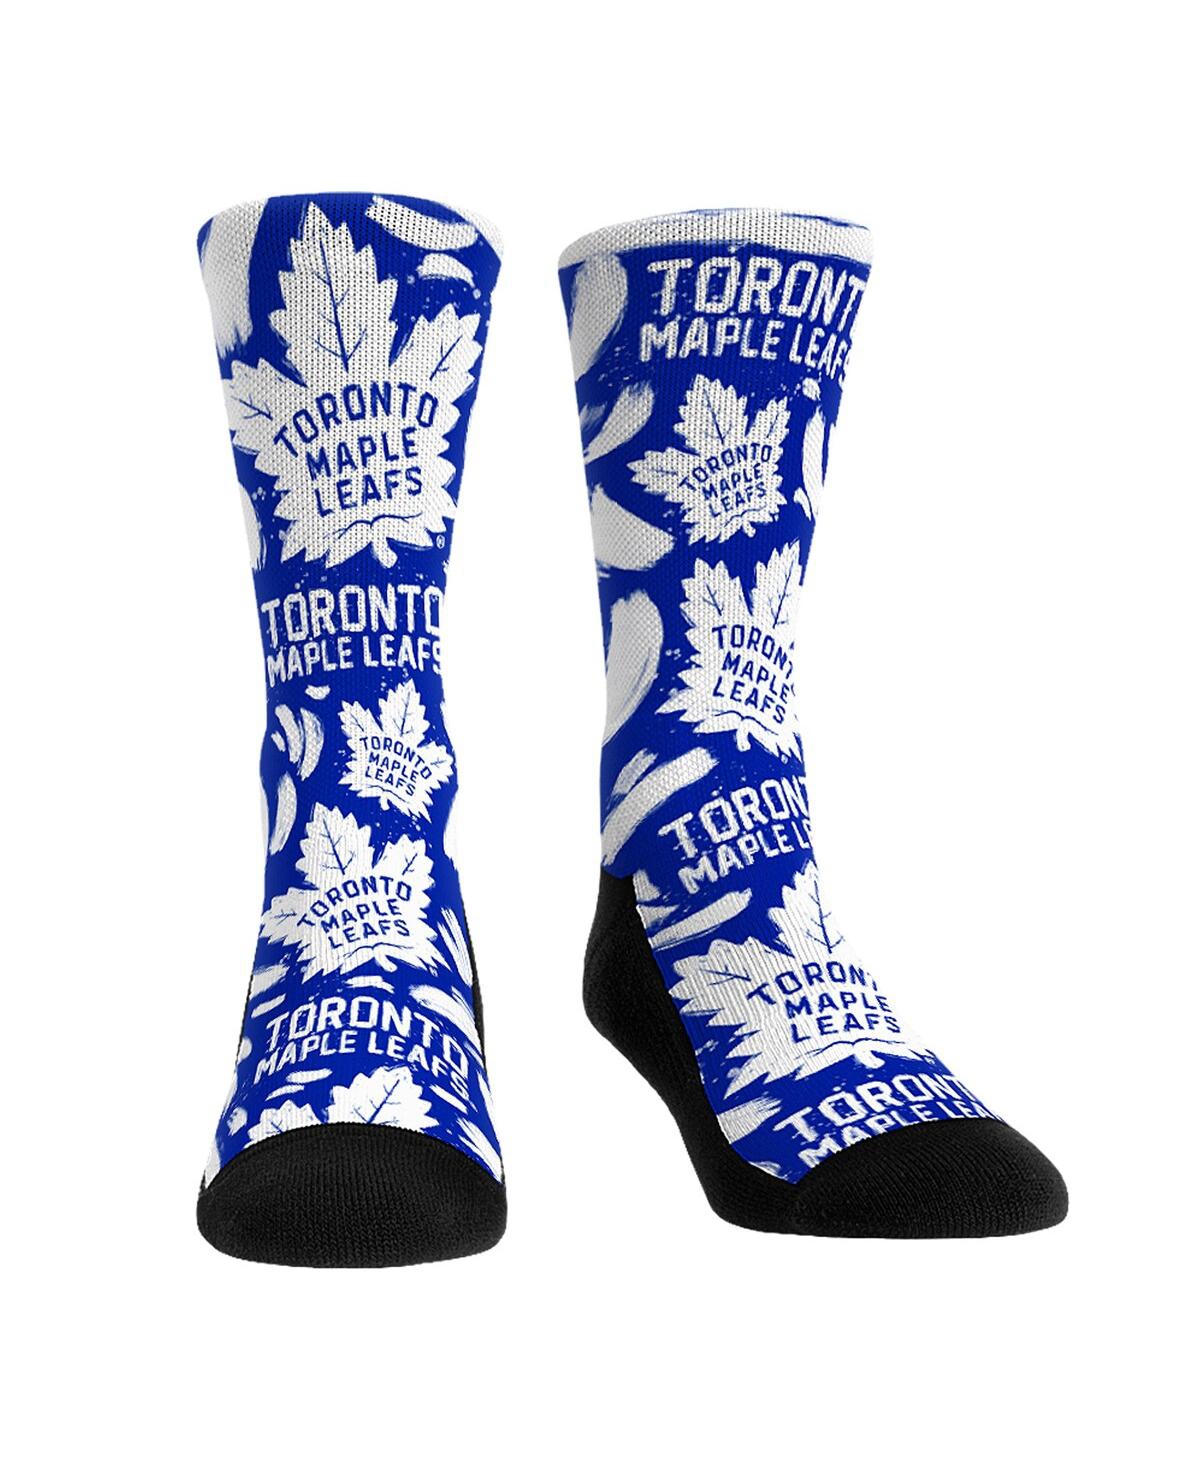 Rock 'em Men's And Women's  Socks Toronto Maple Leafs Allover Logo And Paint Crew Socks In Blue